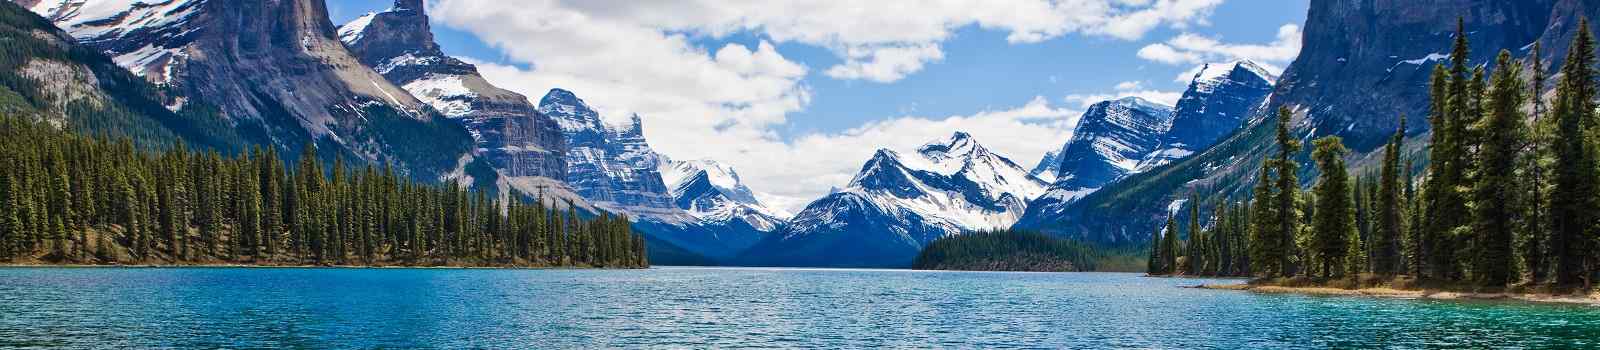 CAD-WEST-WAN Magline Lake  Jasper National Park Alberta Canada 46772335